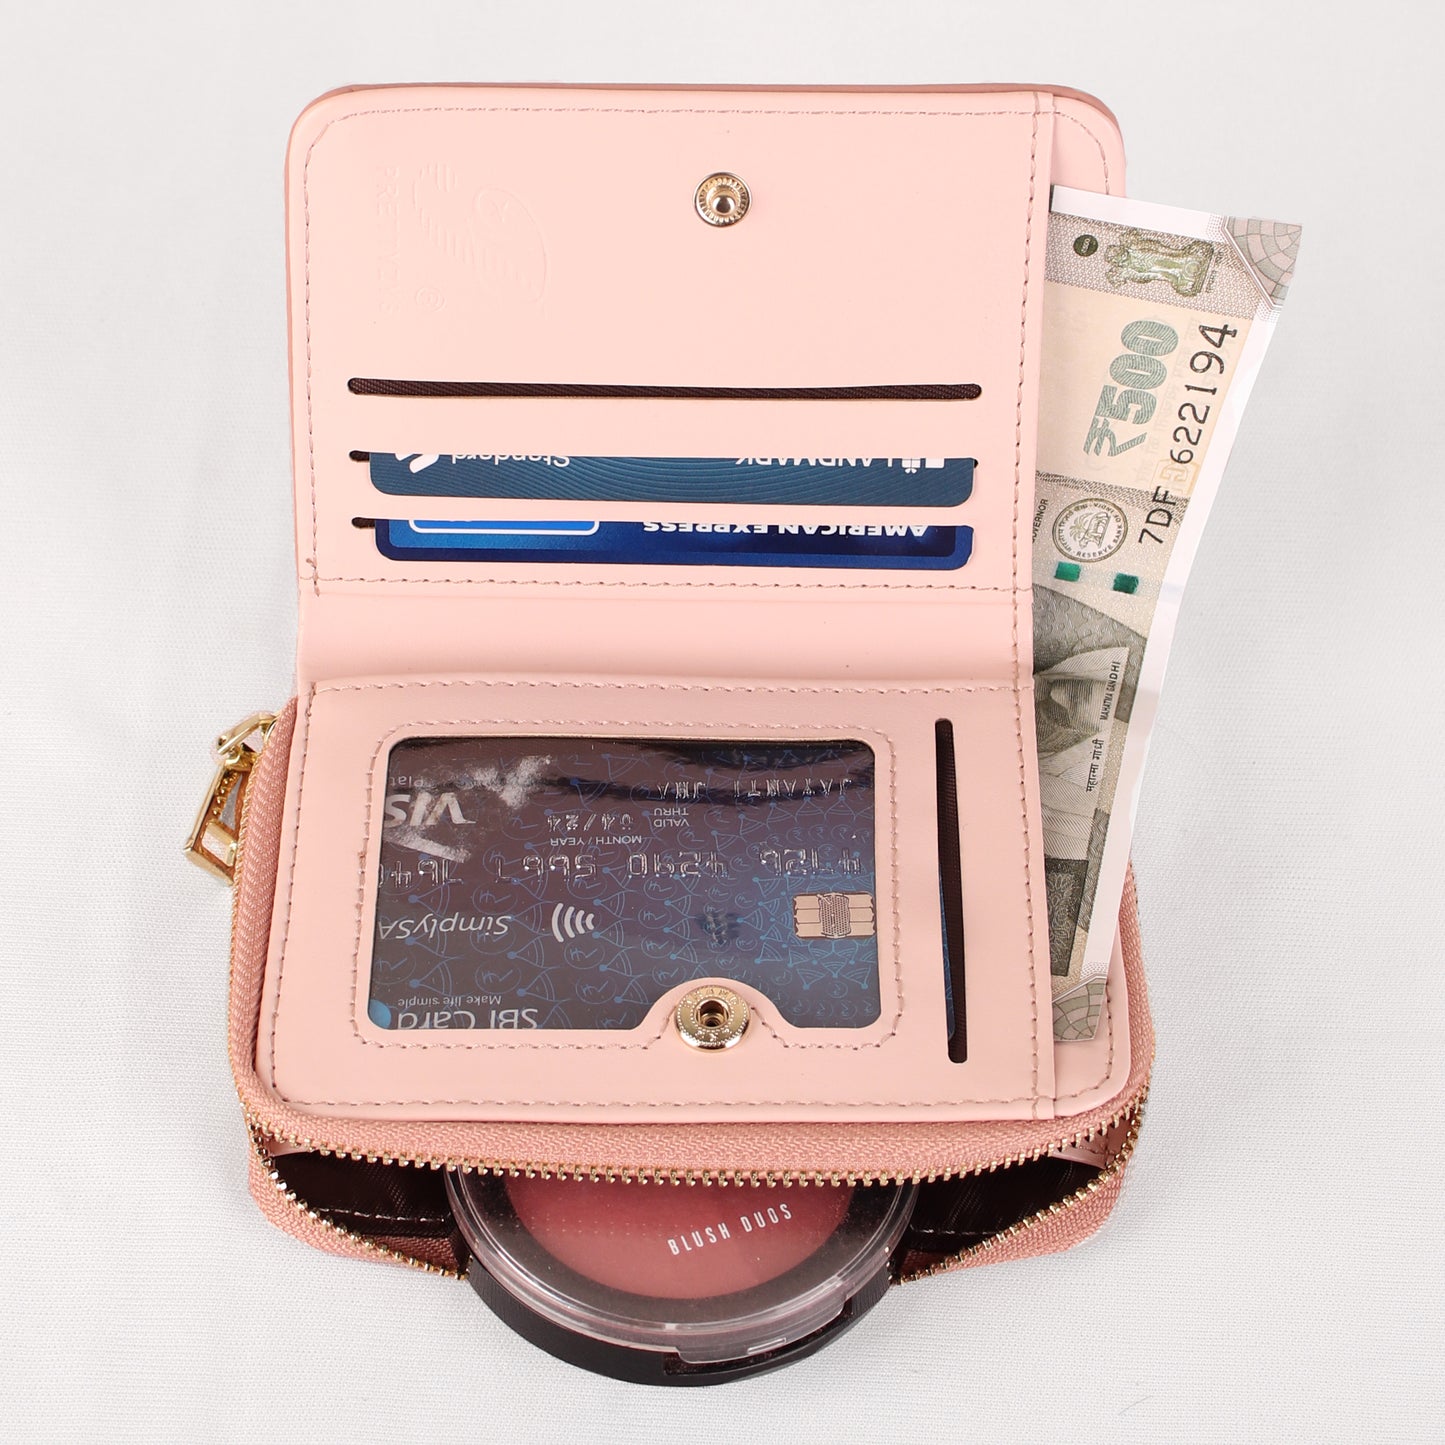 The Dual Fern Wallet in Pink